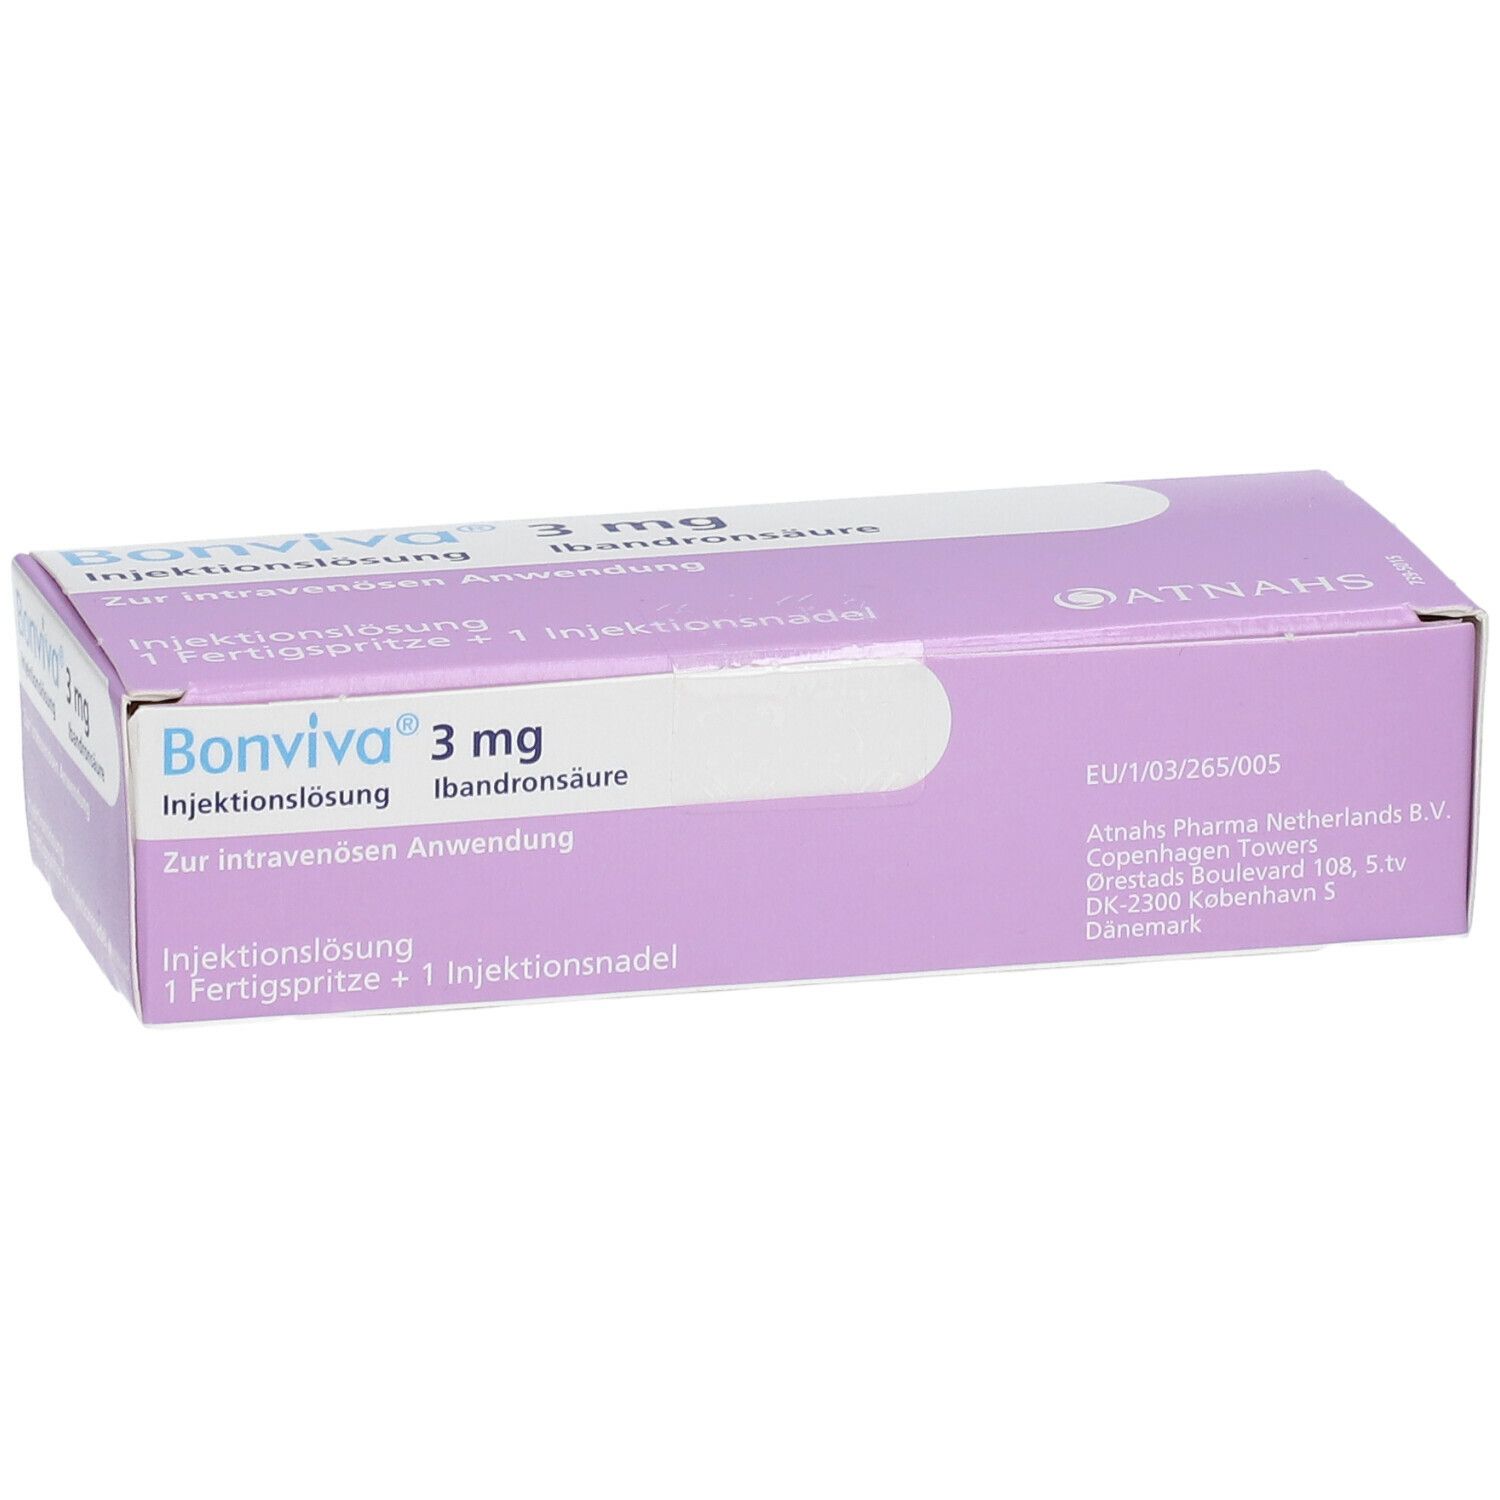 Bonviva® 3 mg